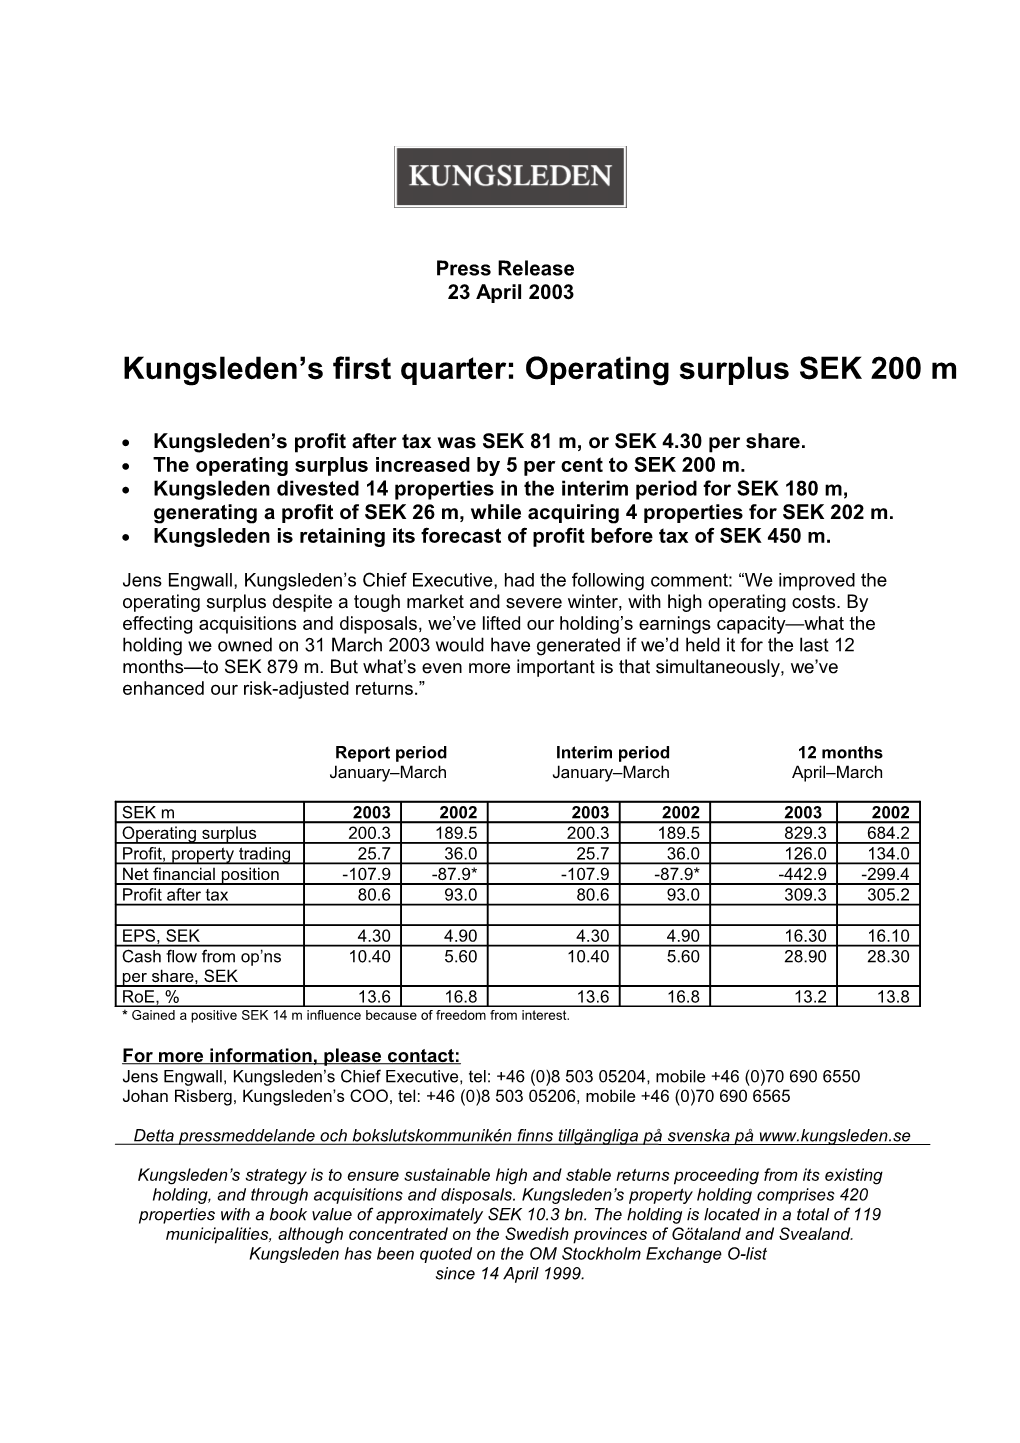 Kungsleden S First Quarter: Operating Surplus SEK 200 M